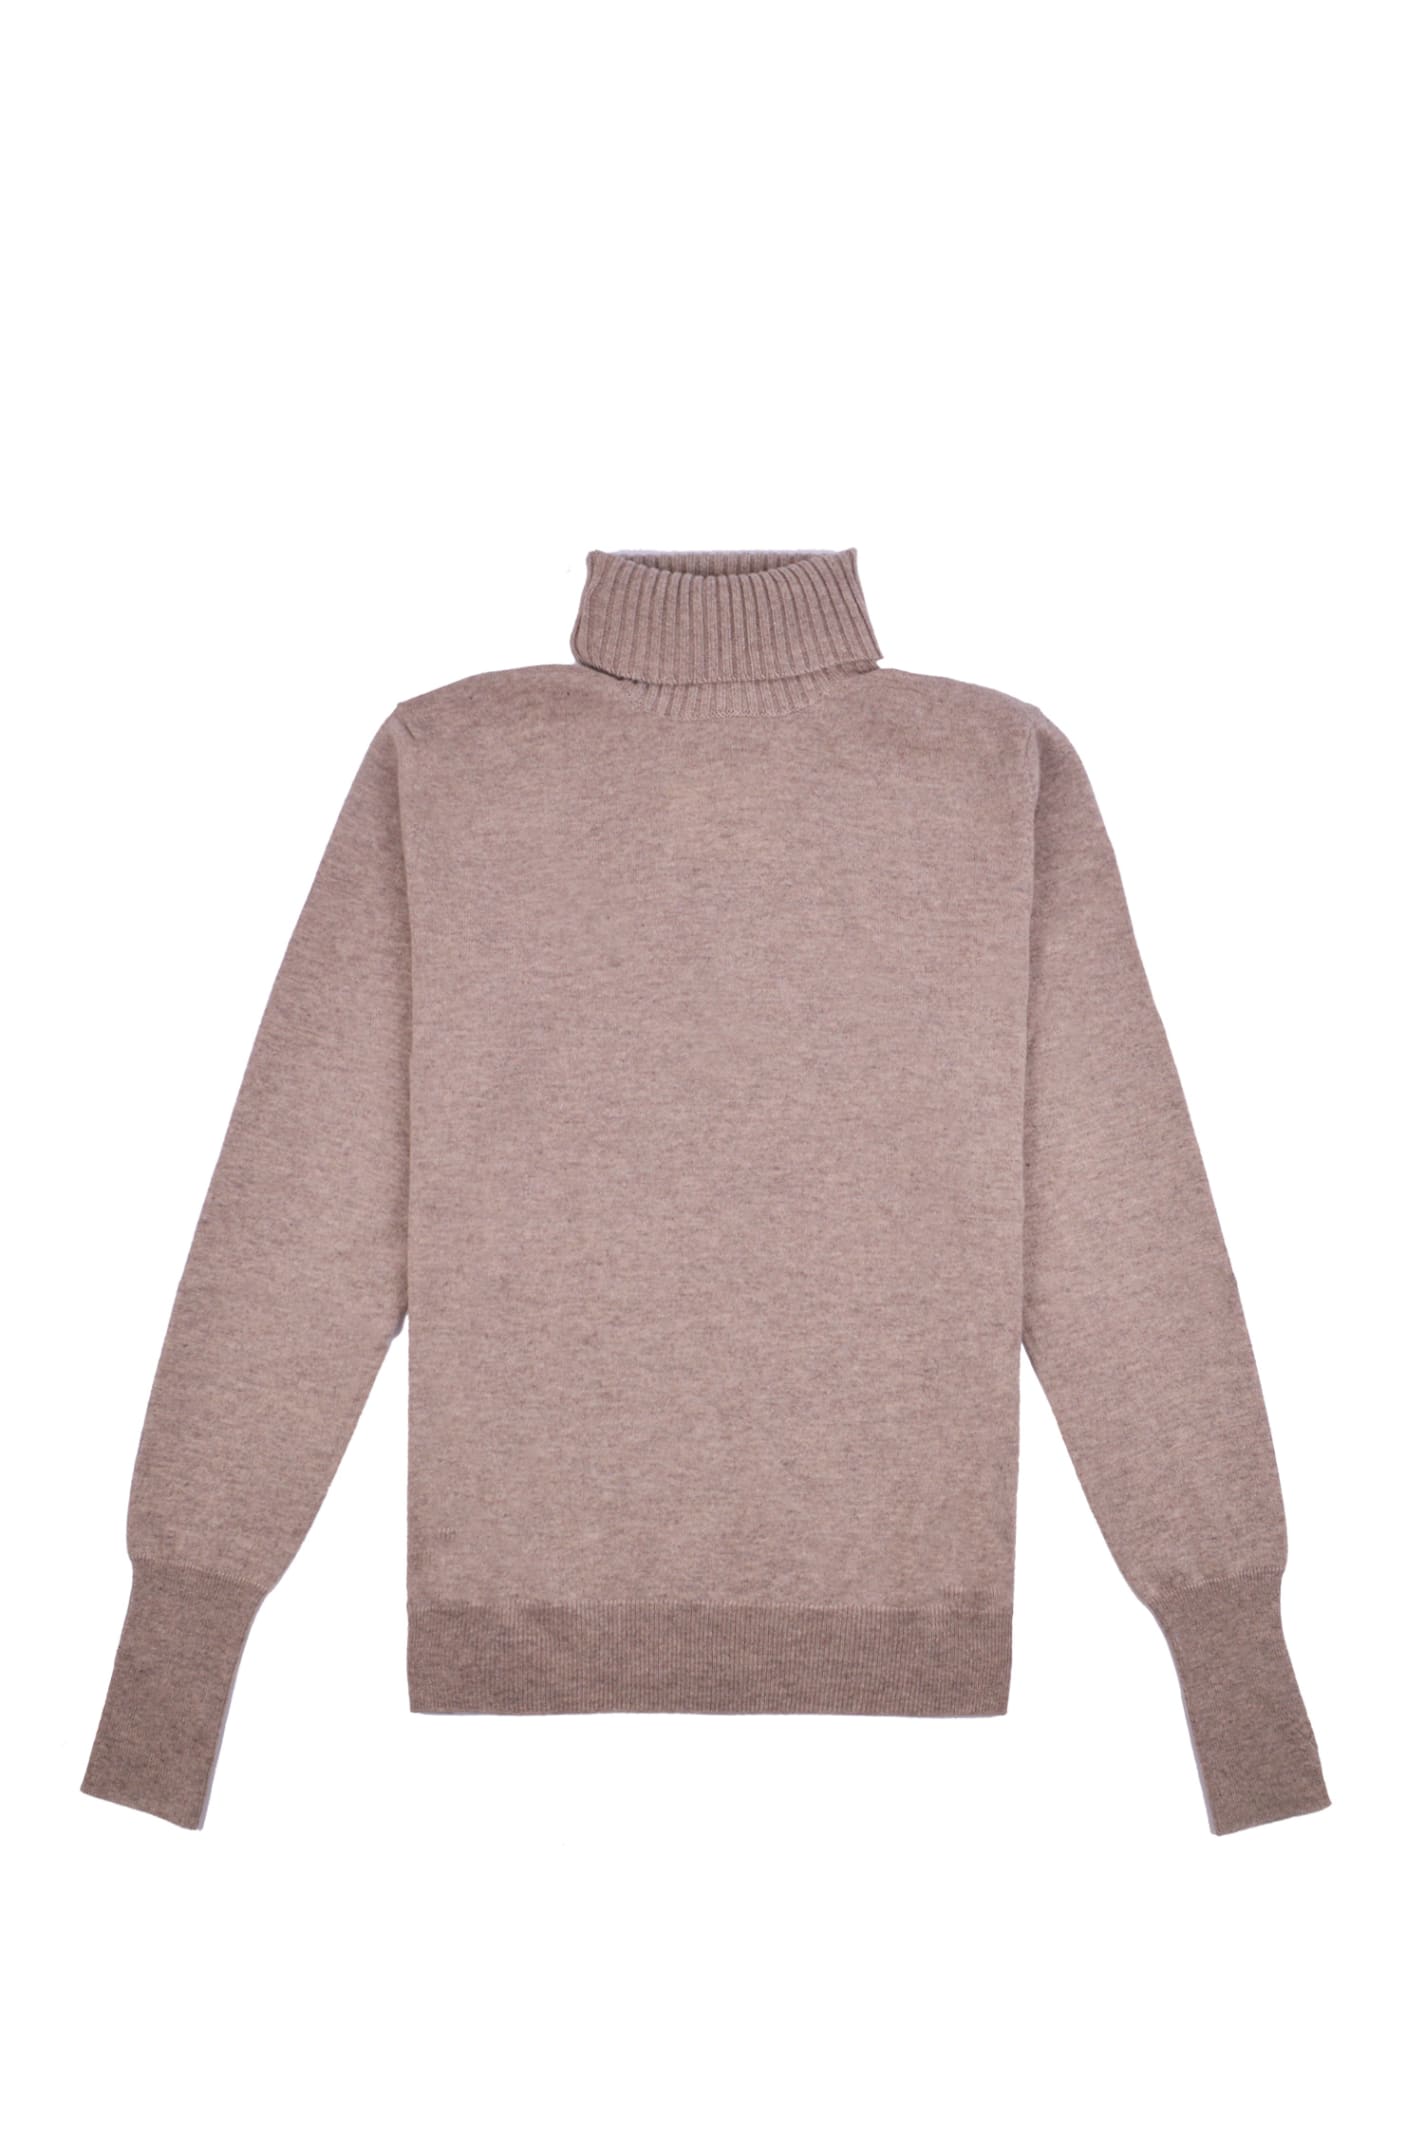 Ballantyne Cashmere Turtleneck Sweater